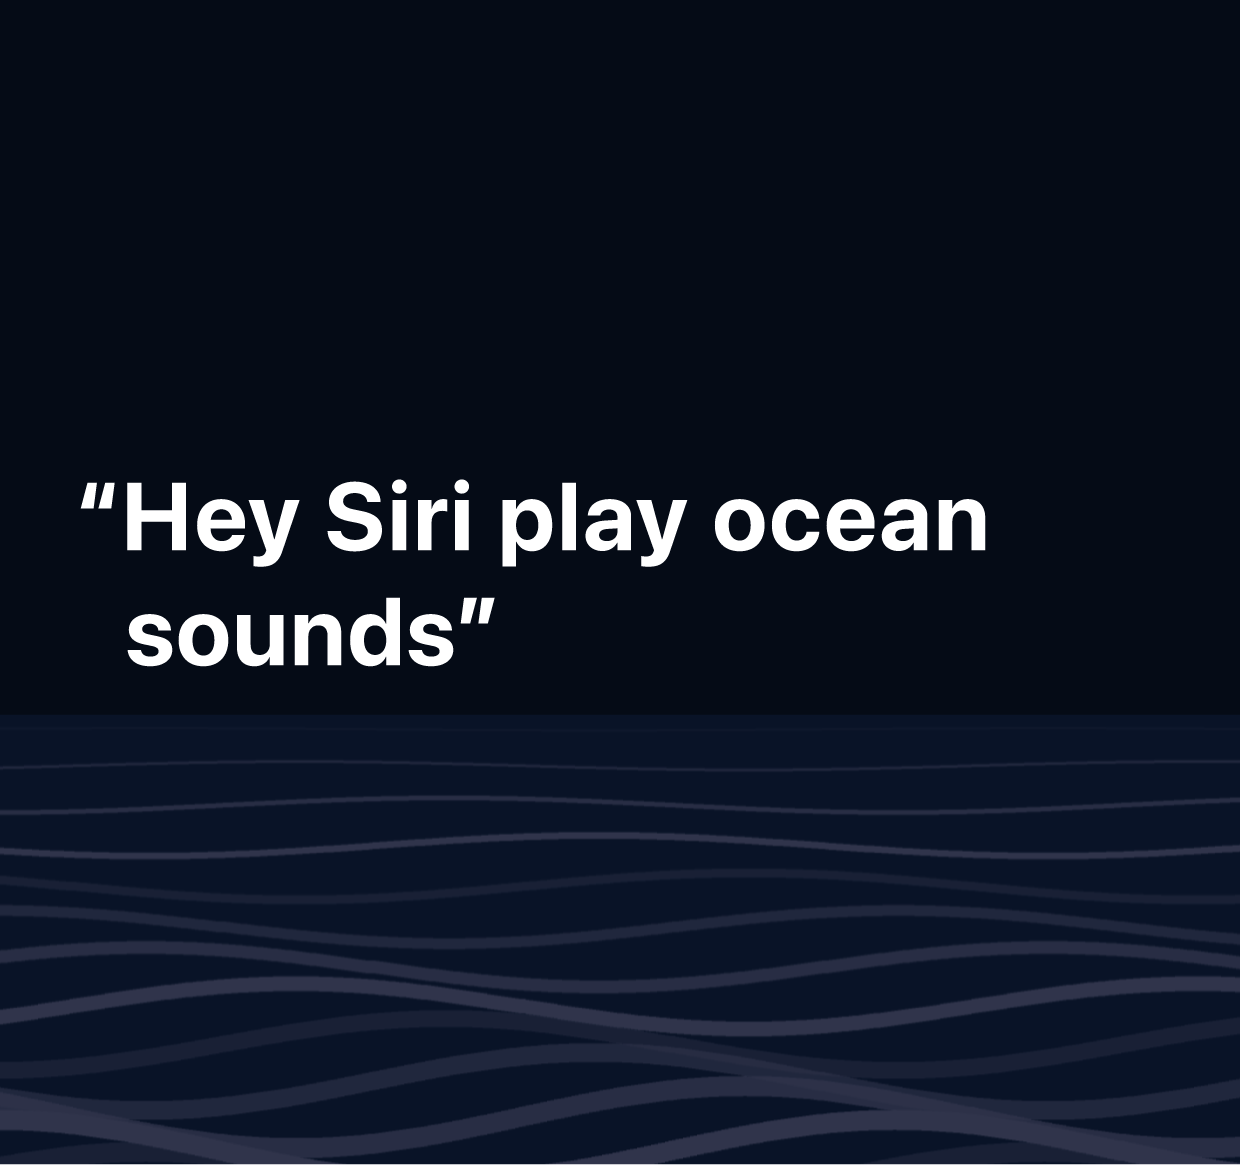 Una il·lustració de les paraules “Oye Siri, reproduce sonidos del océano”.